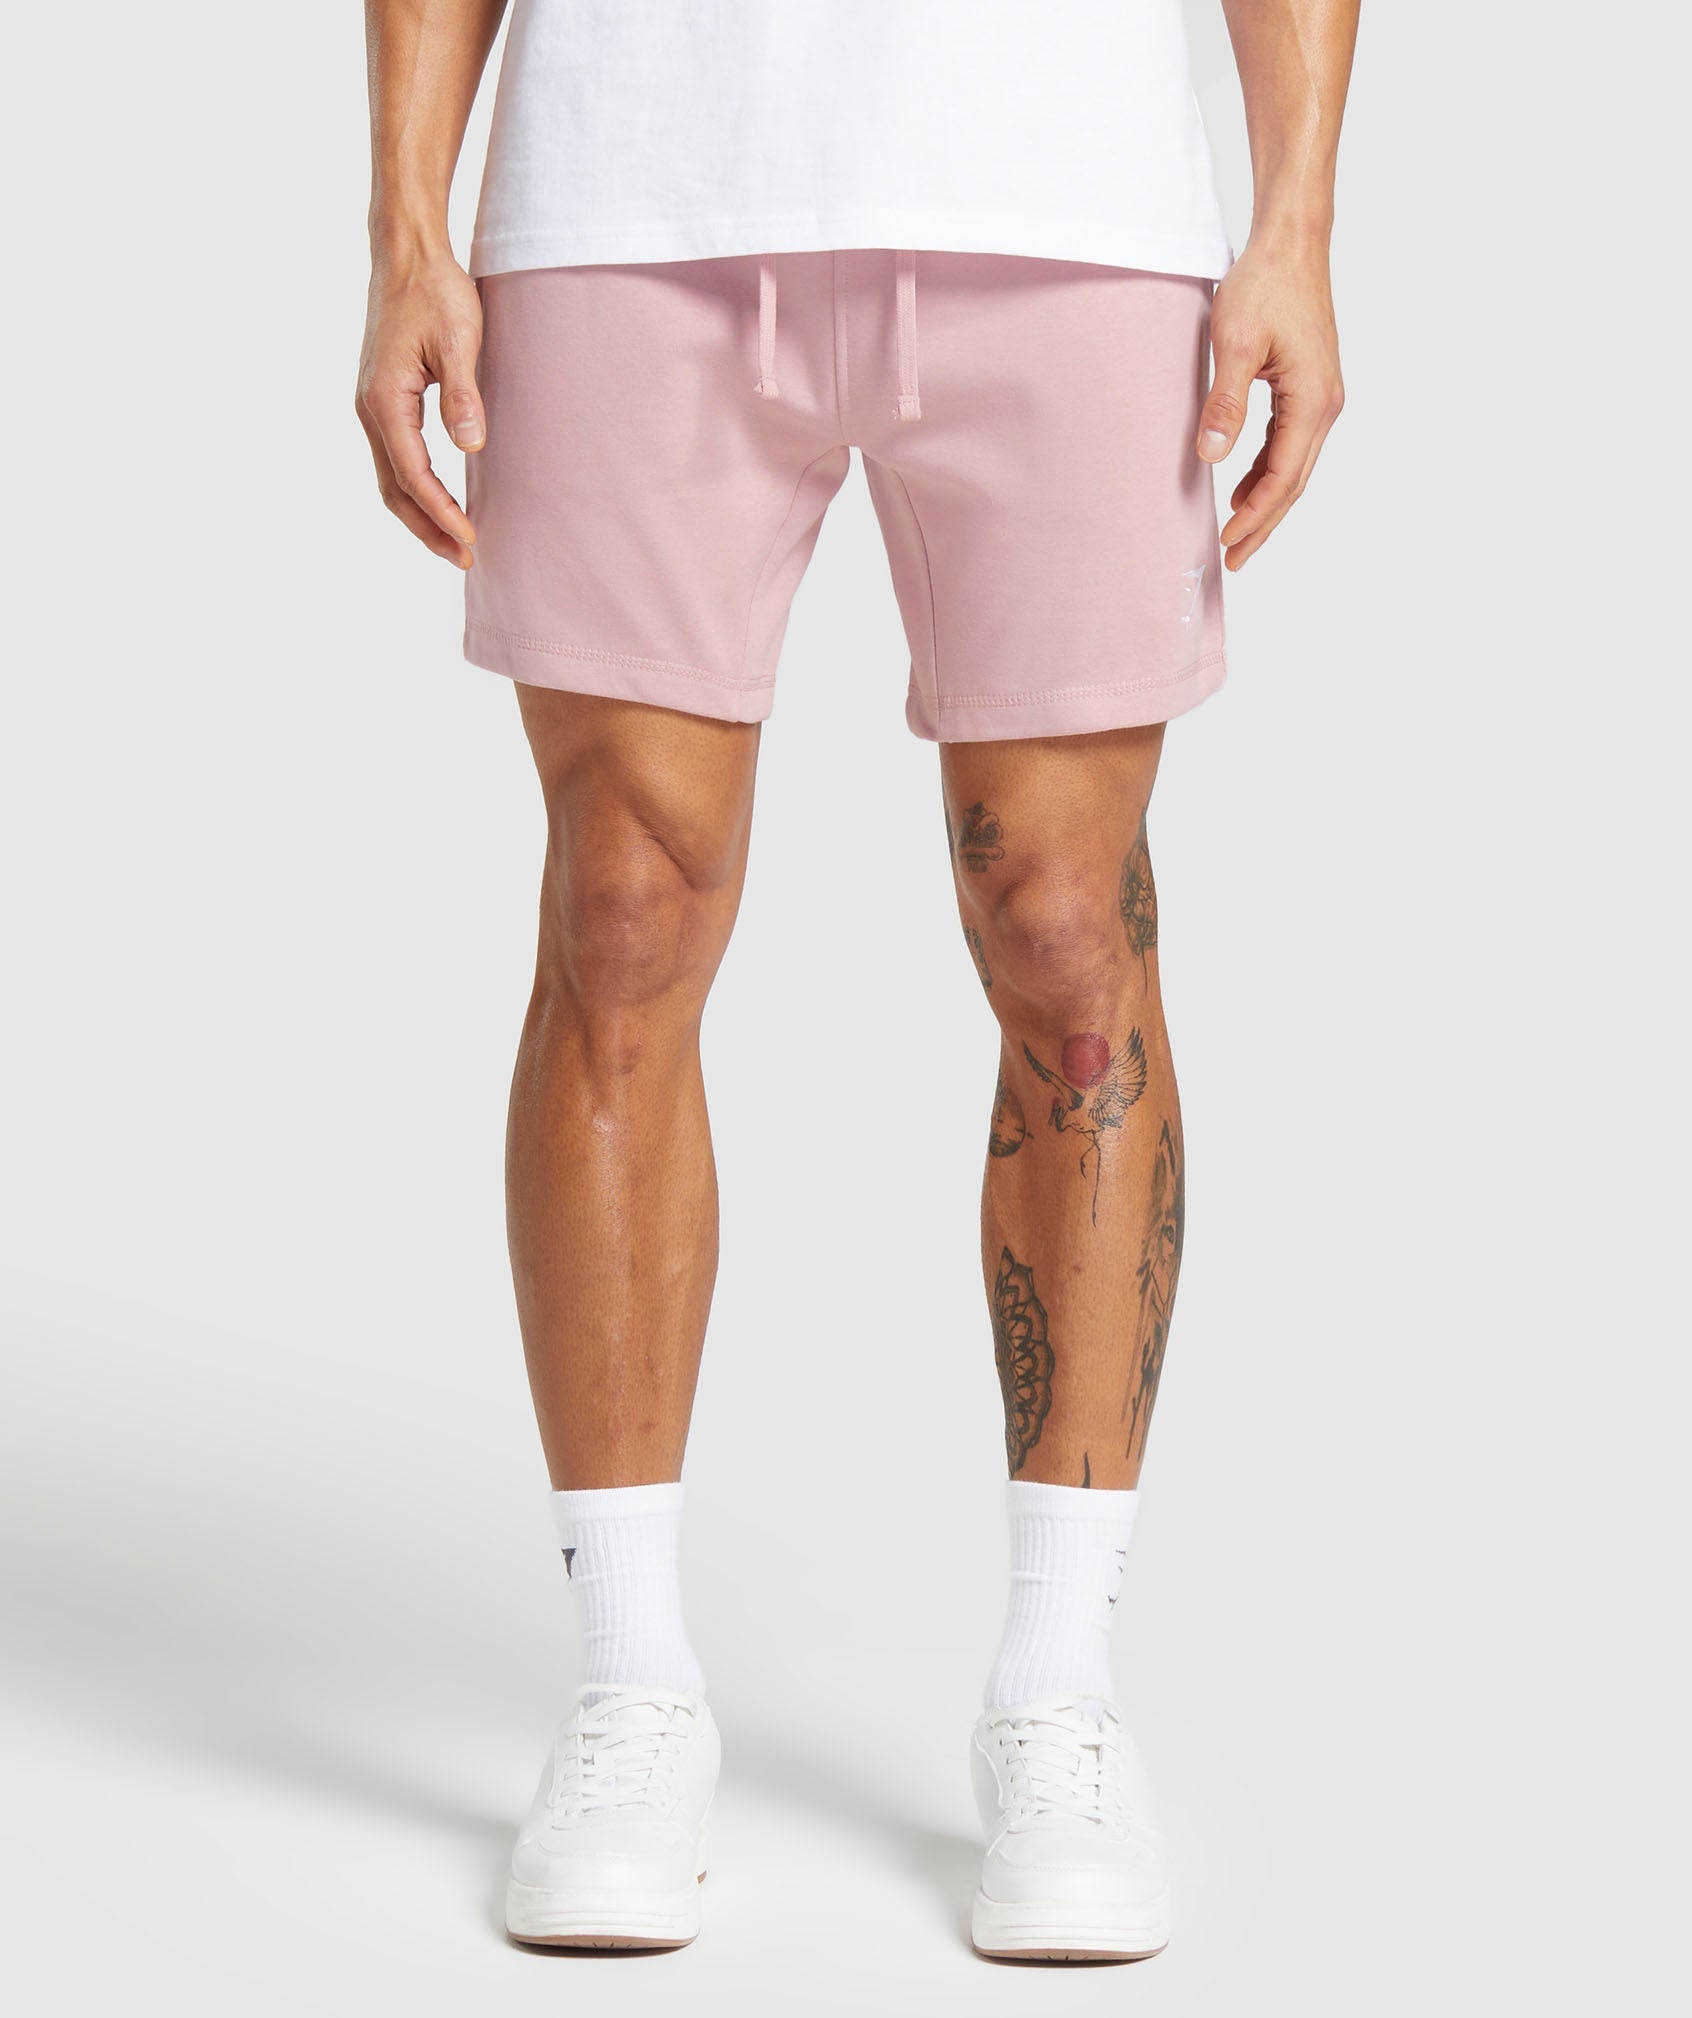 Crest Shorts dans Light Pinkest en rupture de stock